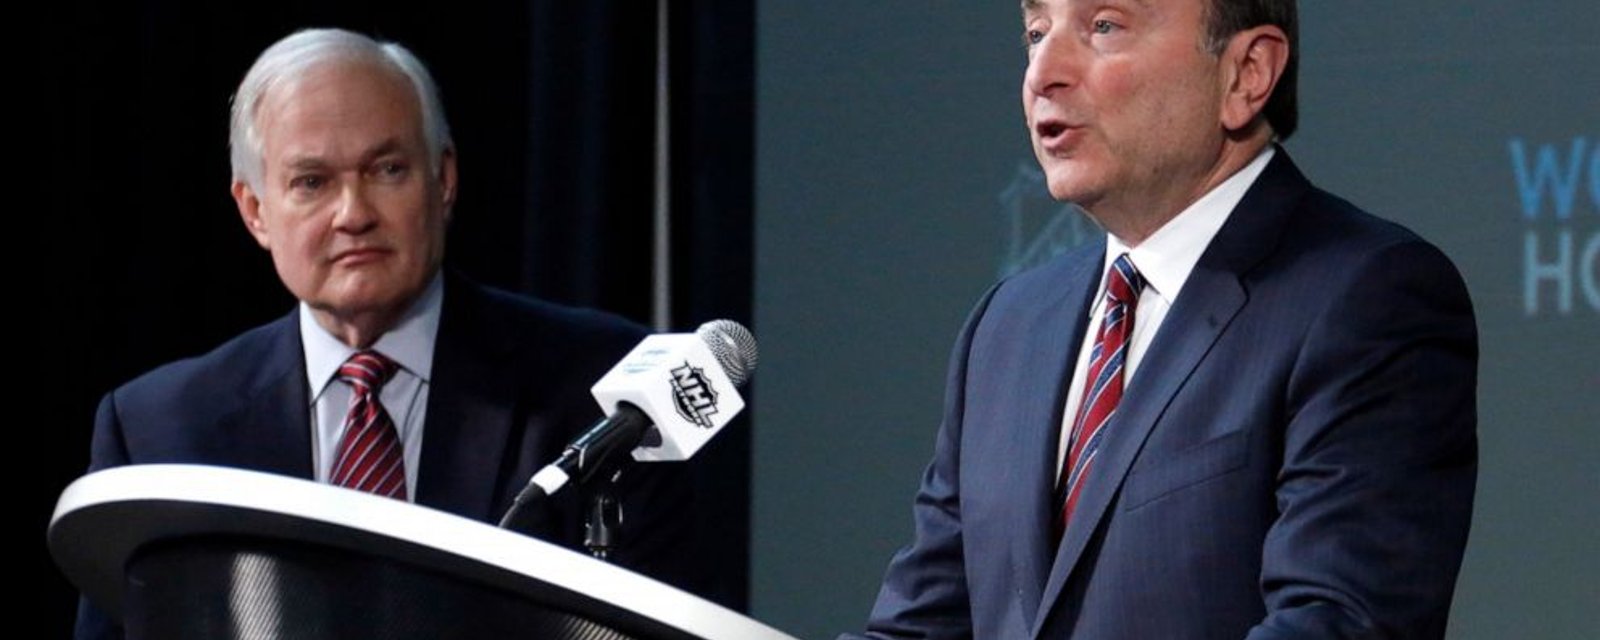 NHL and NHLPA consider long-term labor peace during shutdown 